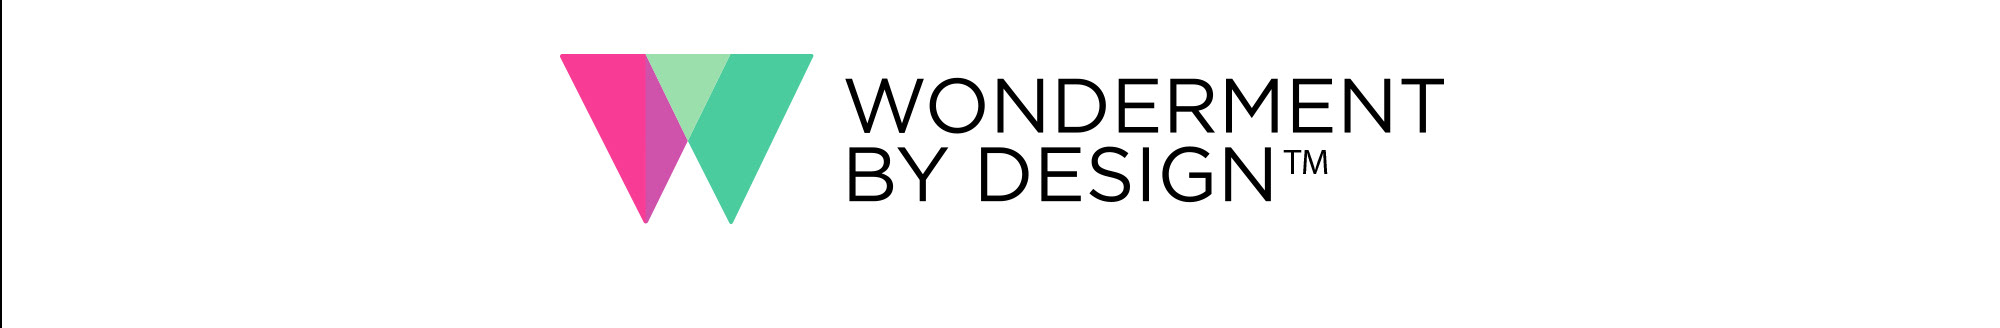 Wonderment by Design™'s profile banner